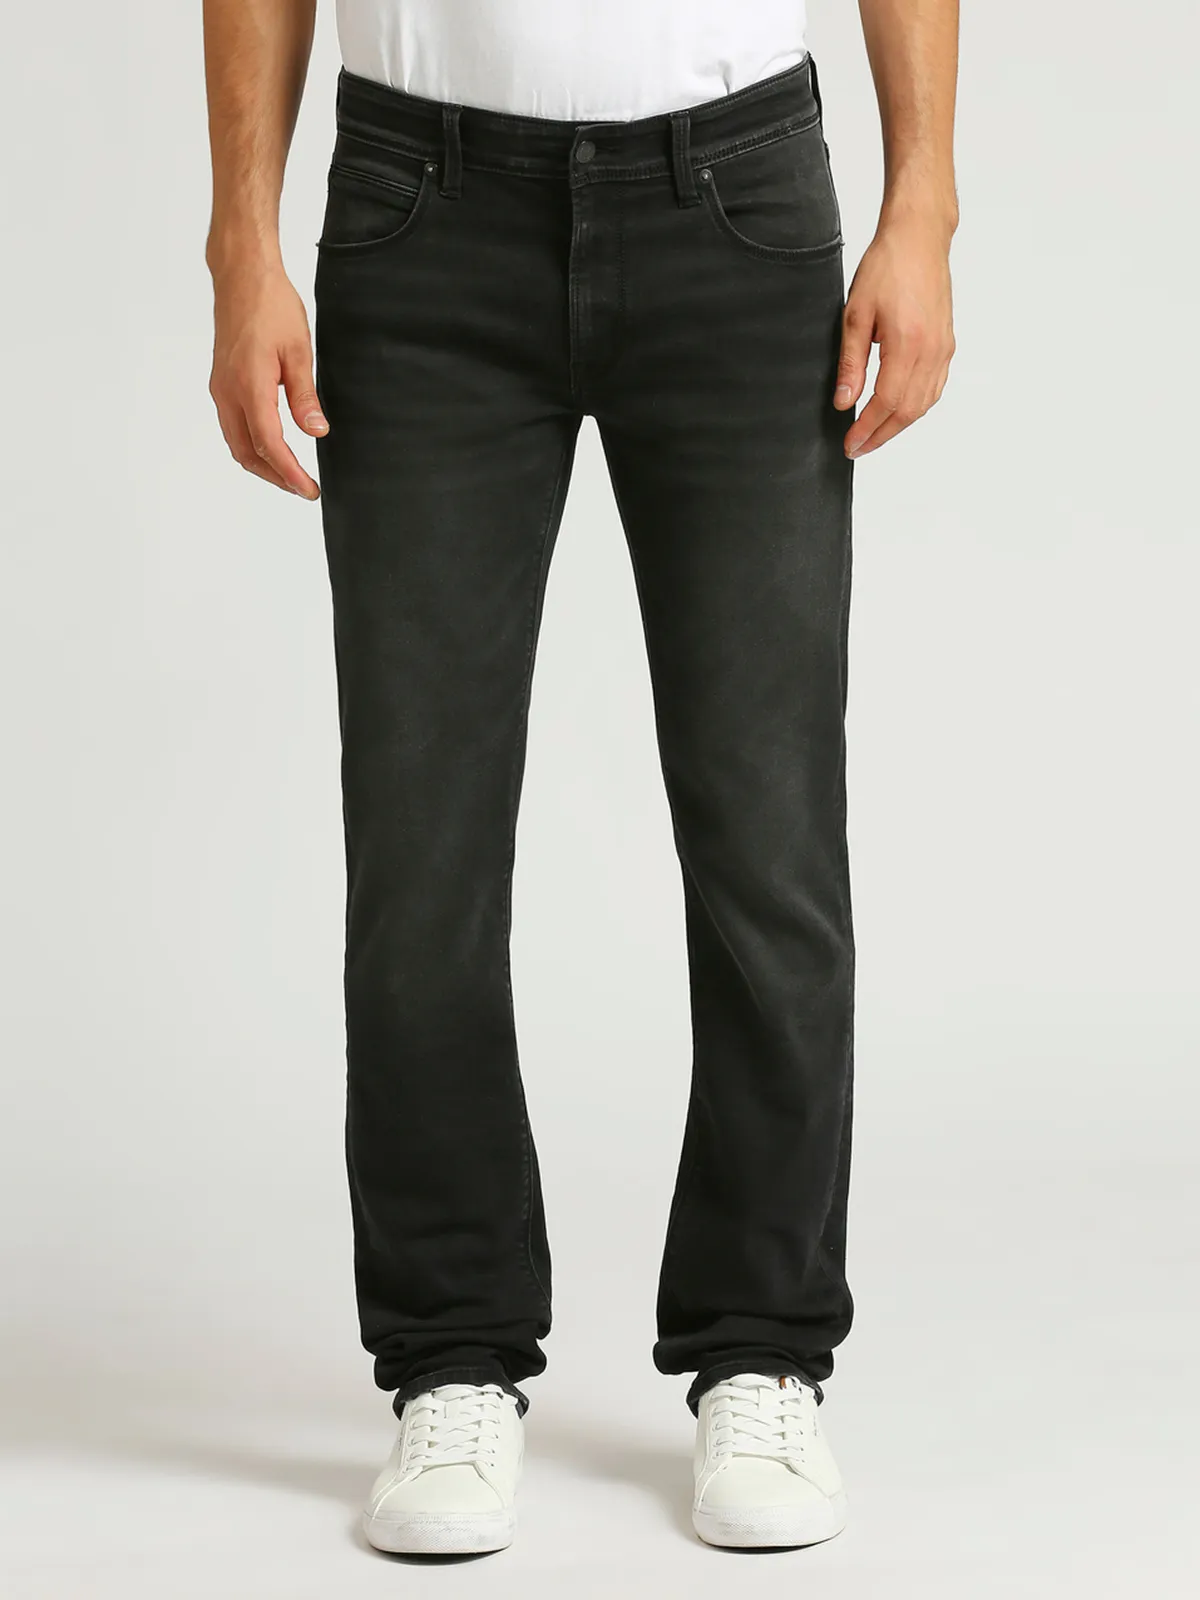 PEPE JEANS black denim washed slim fit jeans